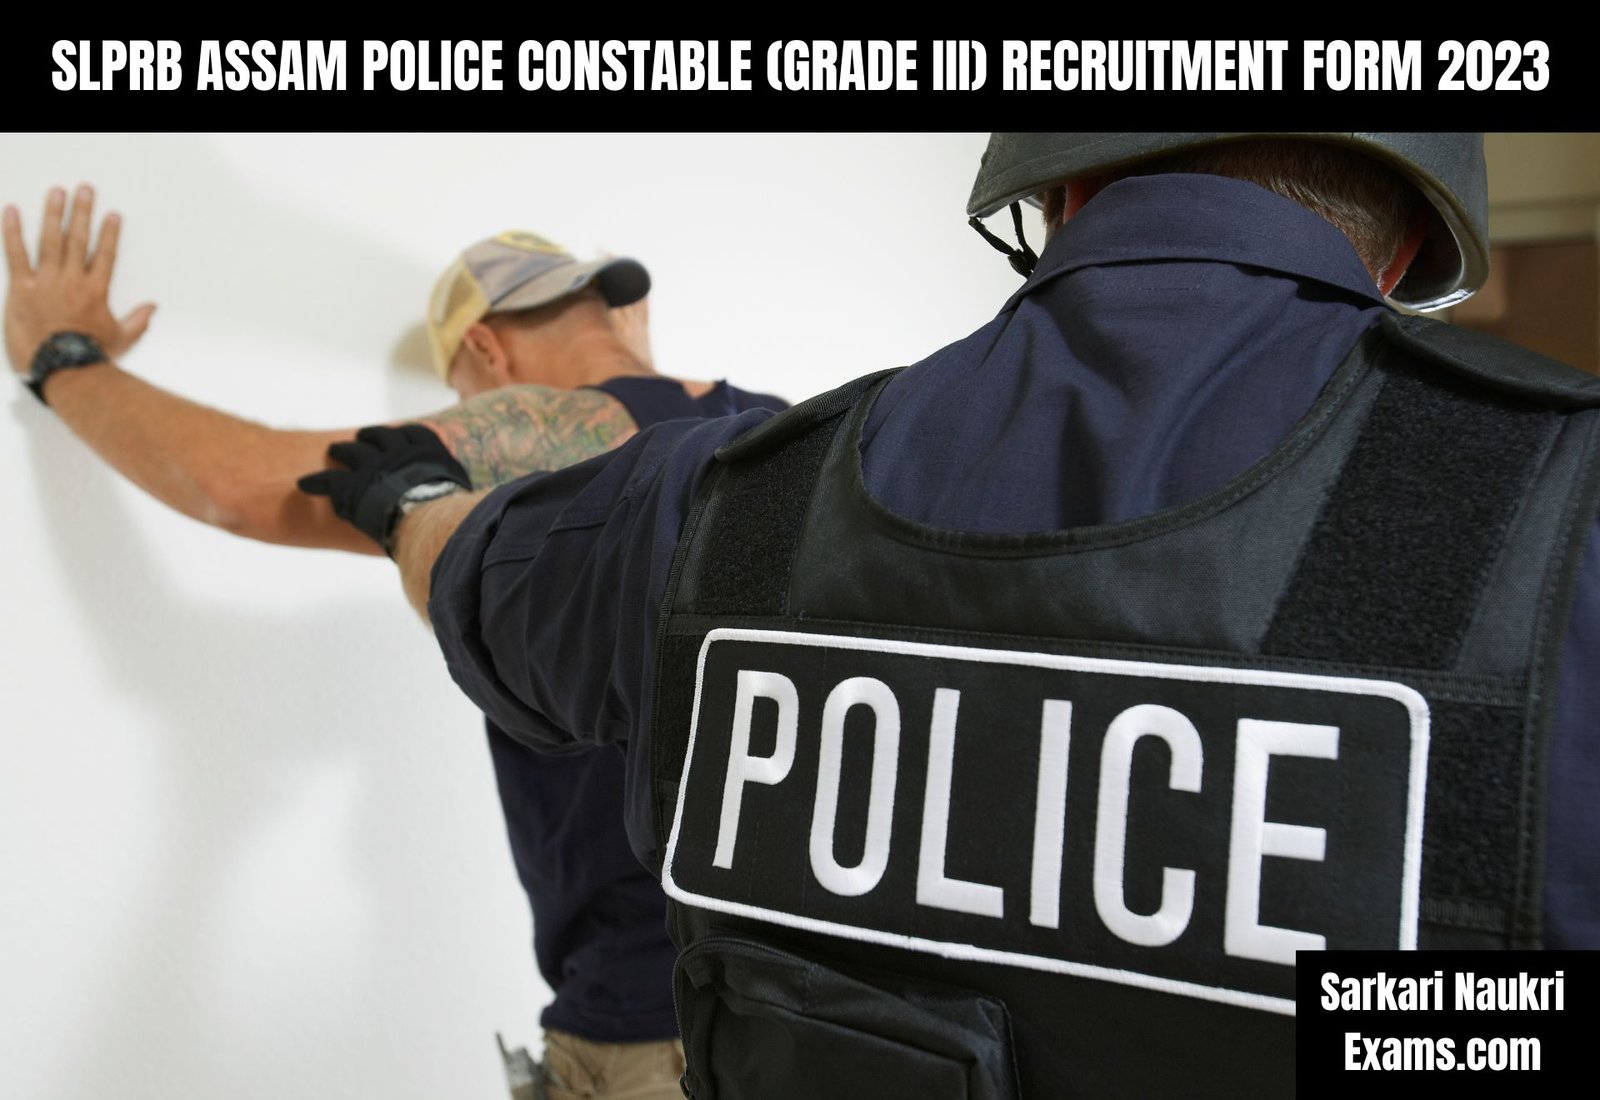 SLPRB Assam Police Constable (Grade III) Recruitment Form 2023 | Salary Up To 60500/-